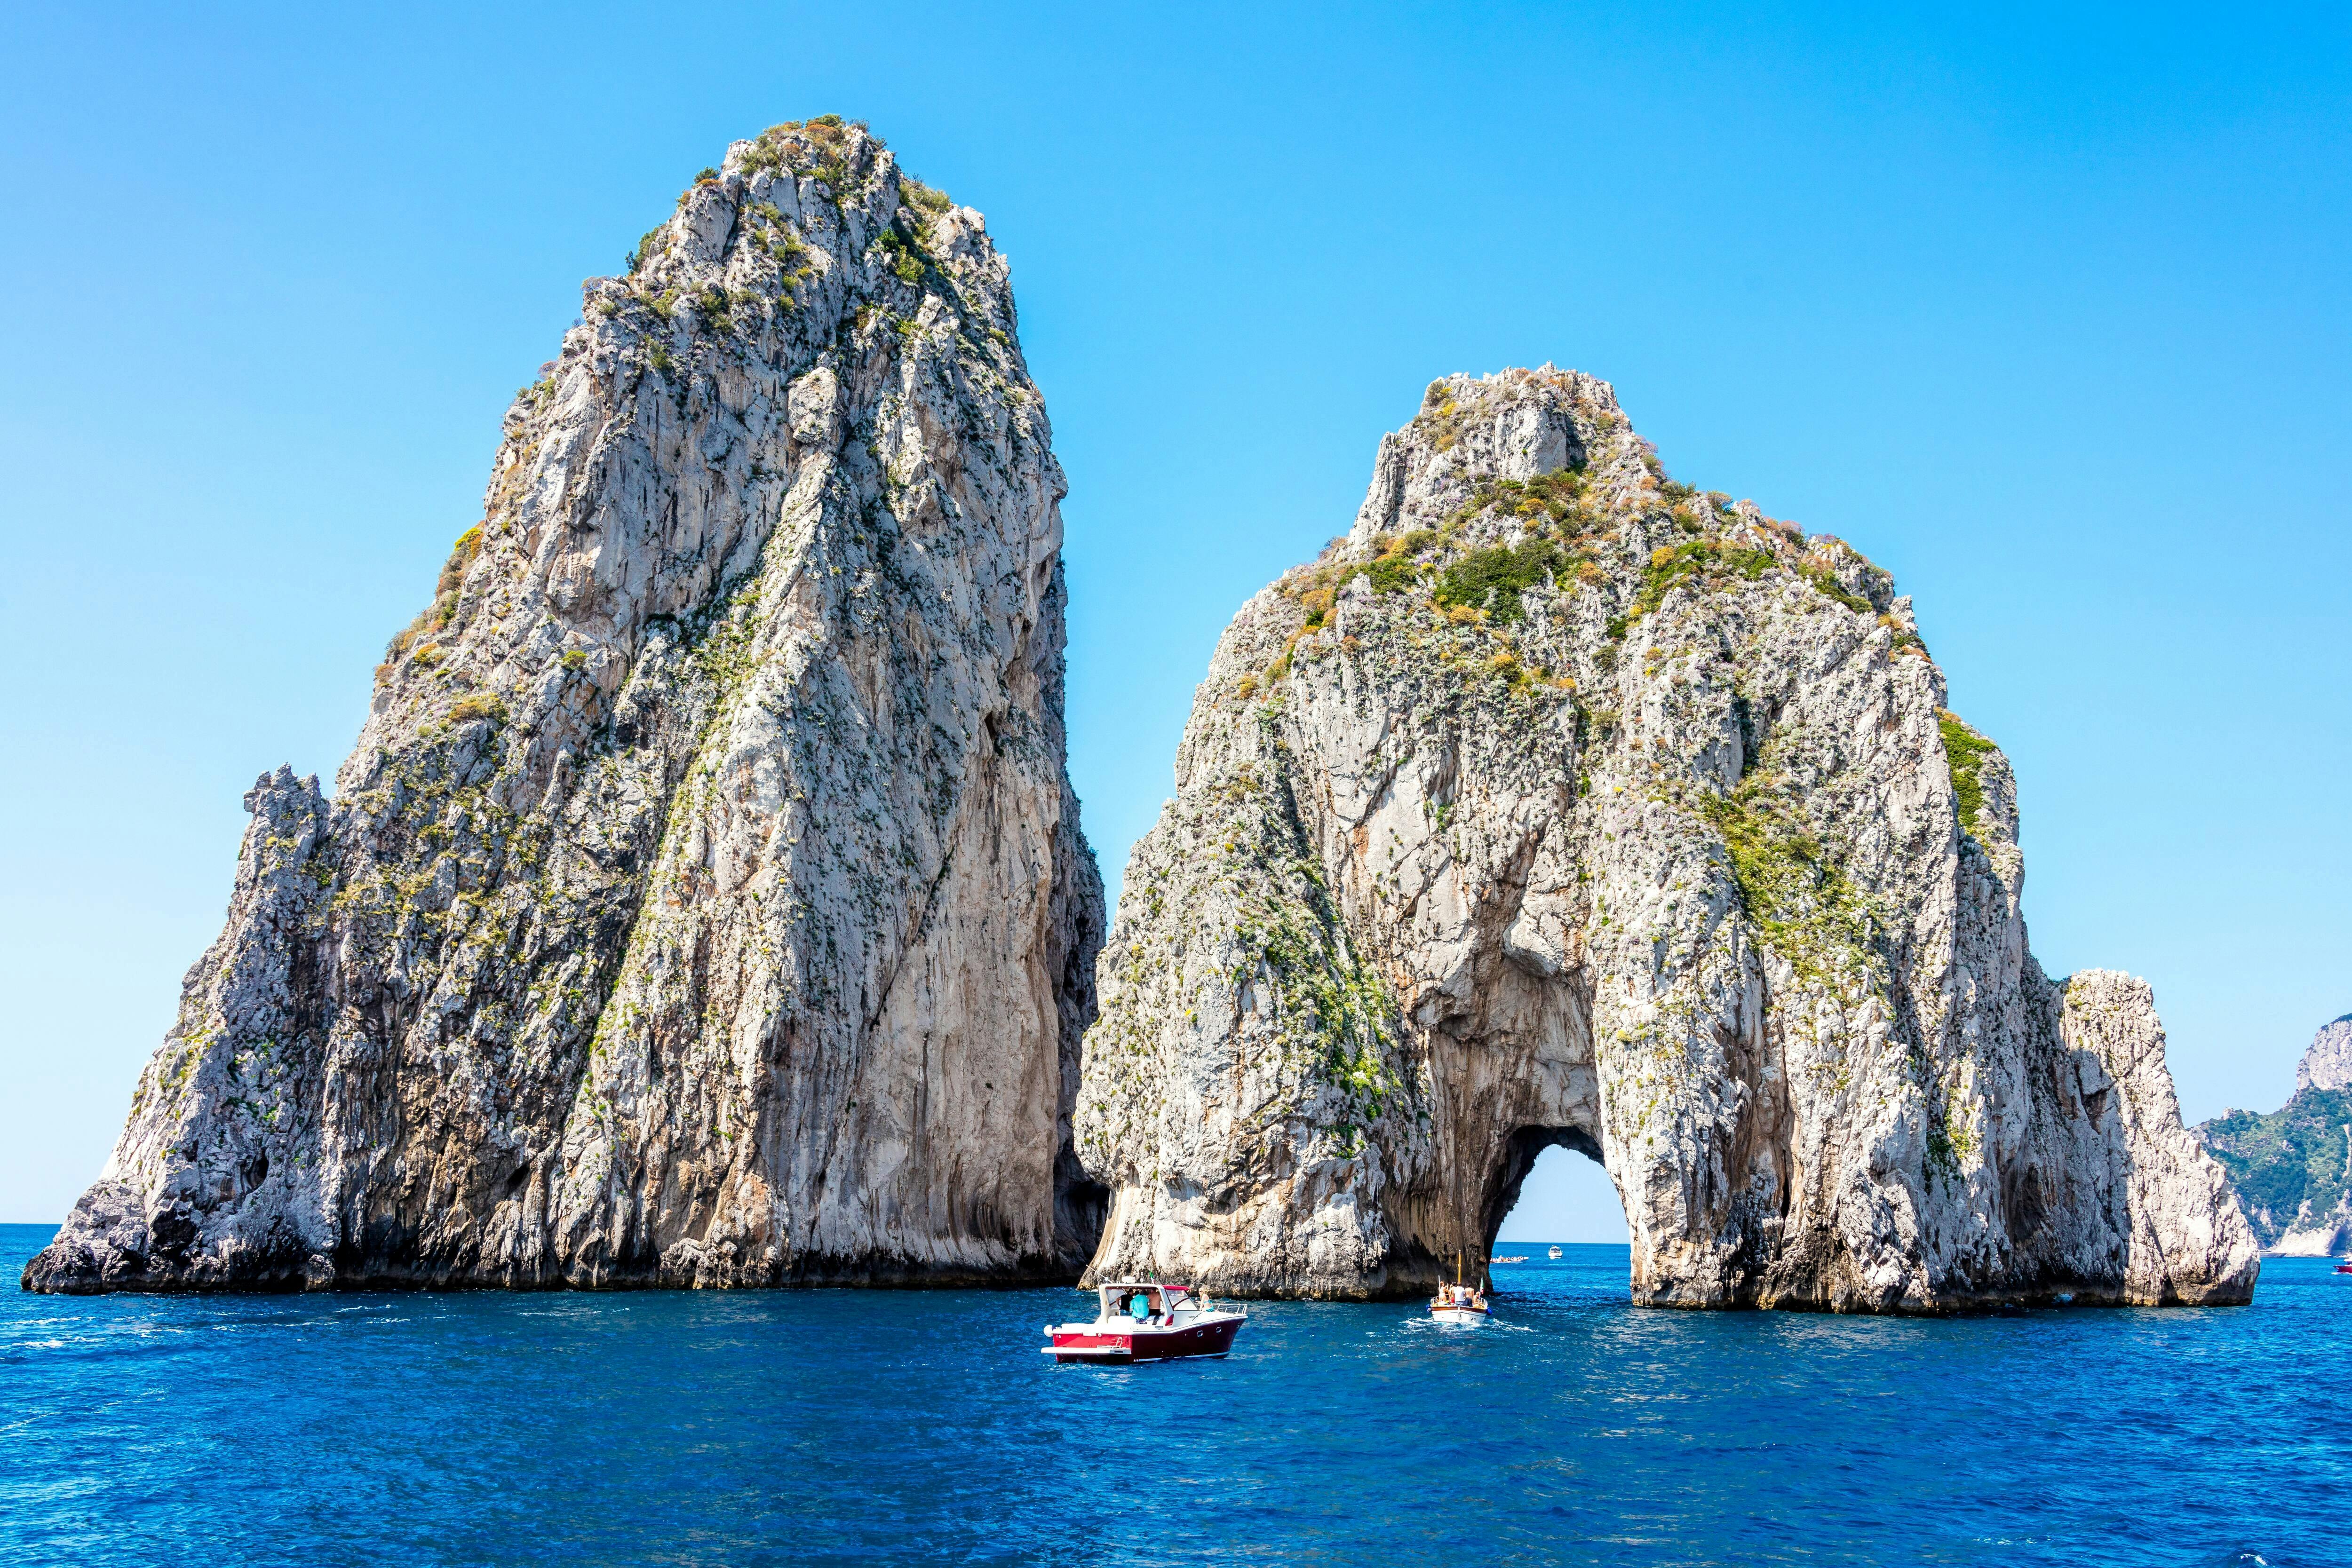 Capri Island Boat Cruise from Amalfi